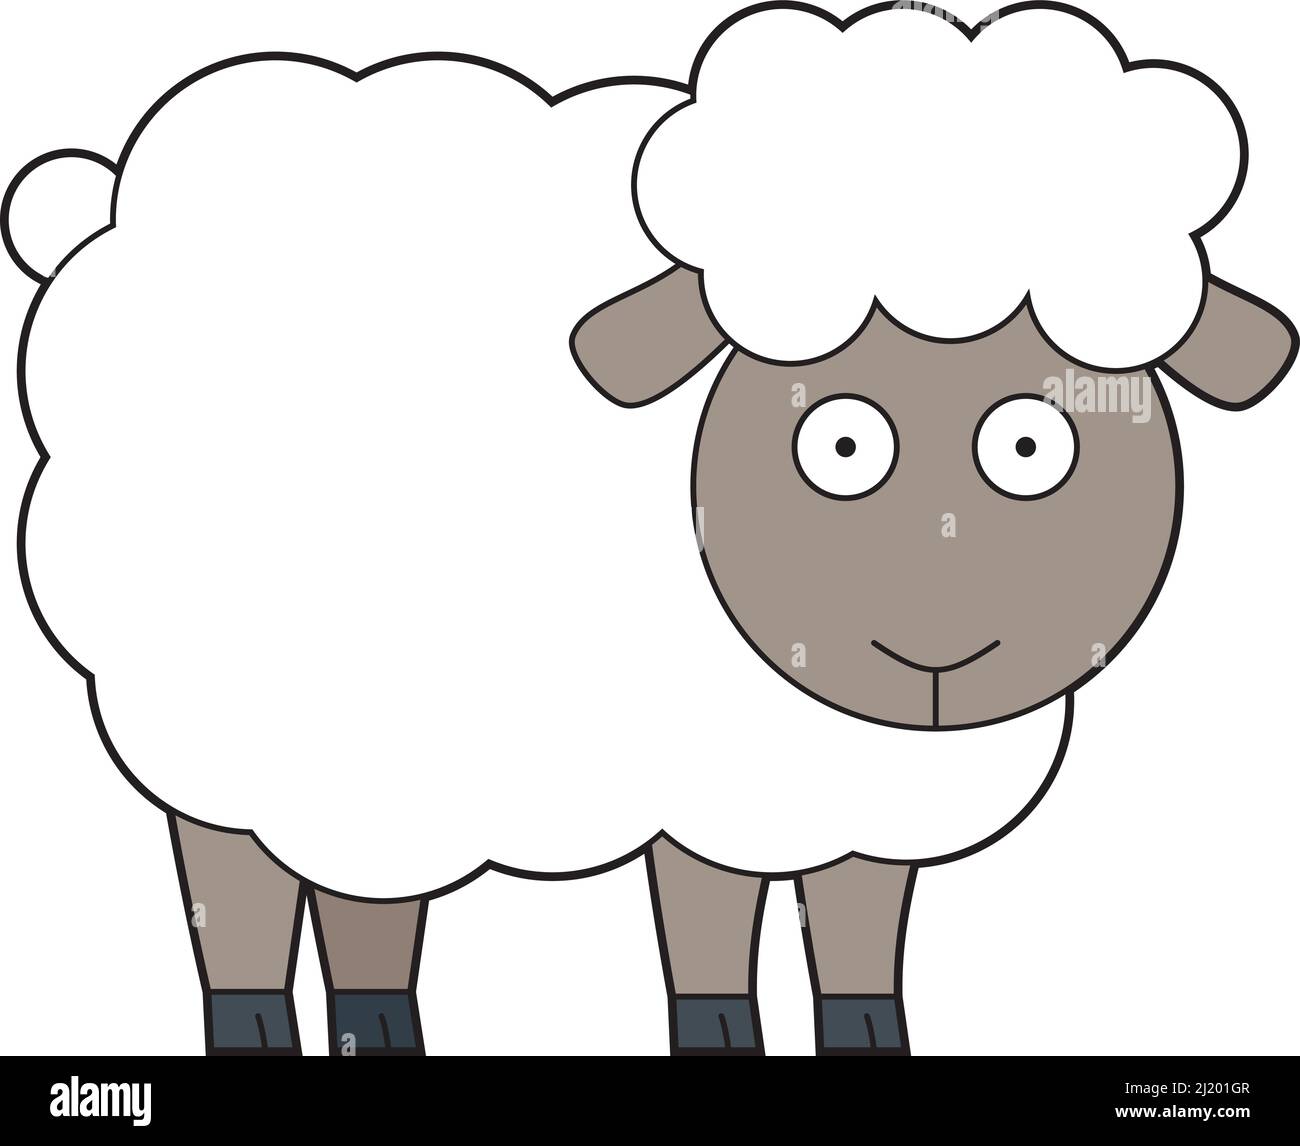 Cute cartoon vector illustration of a white sheep Stock Vector